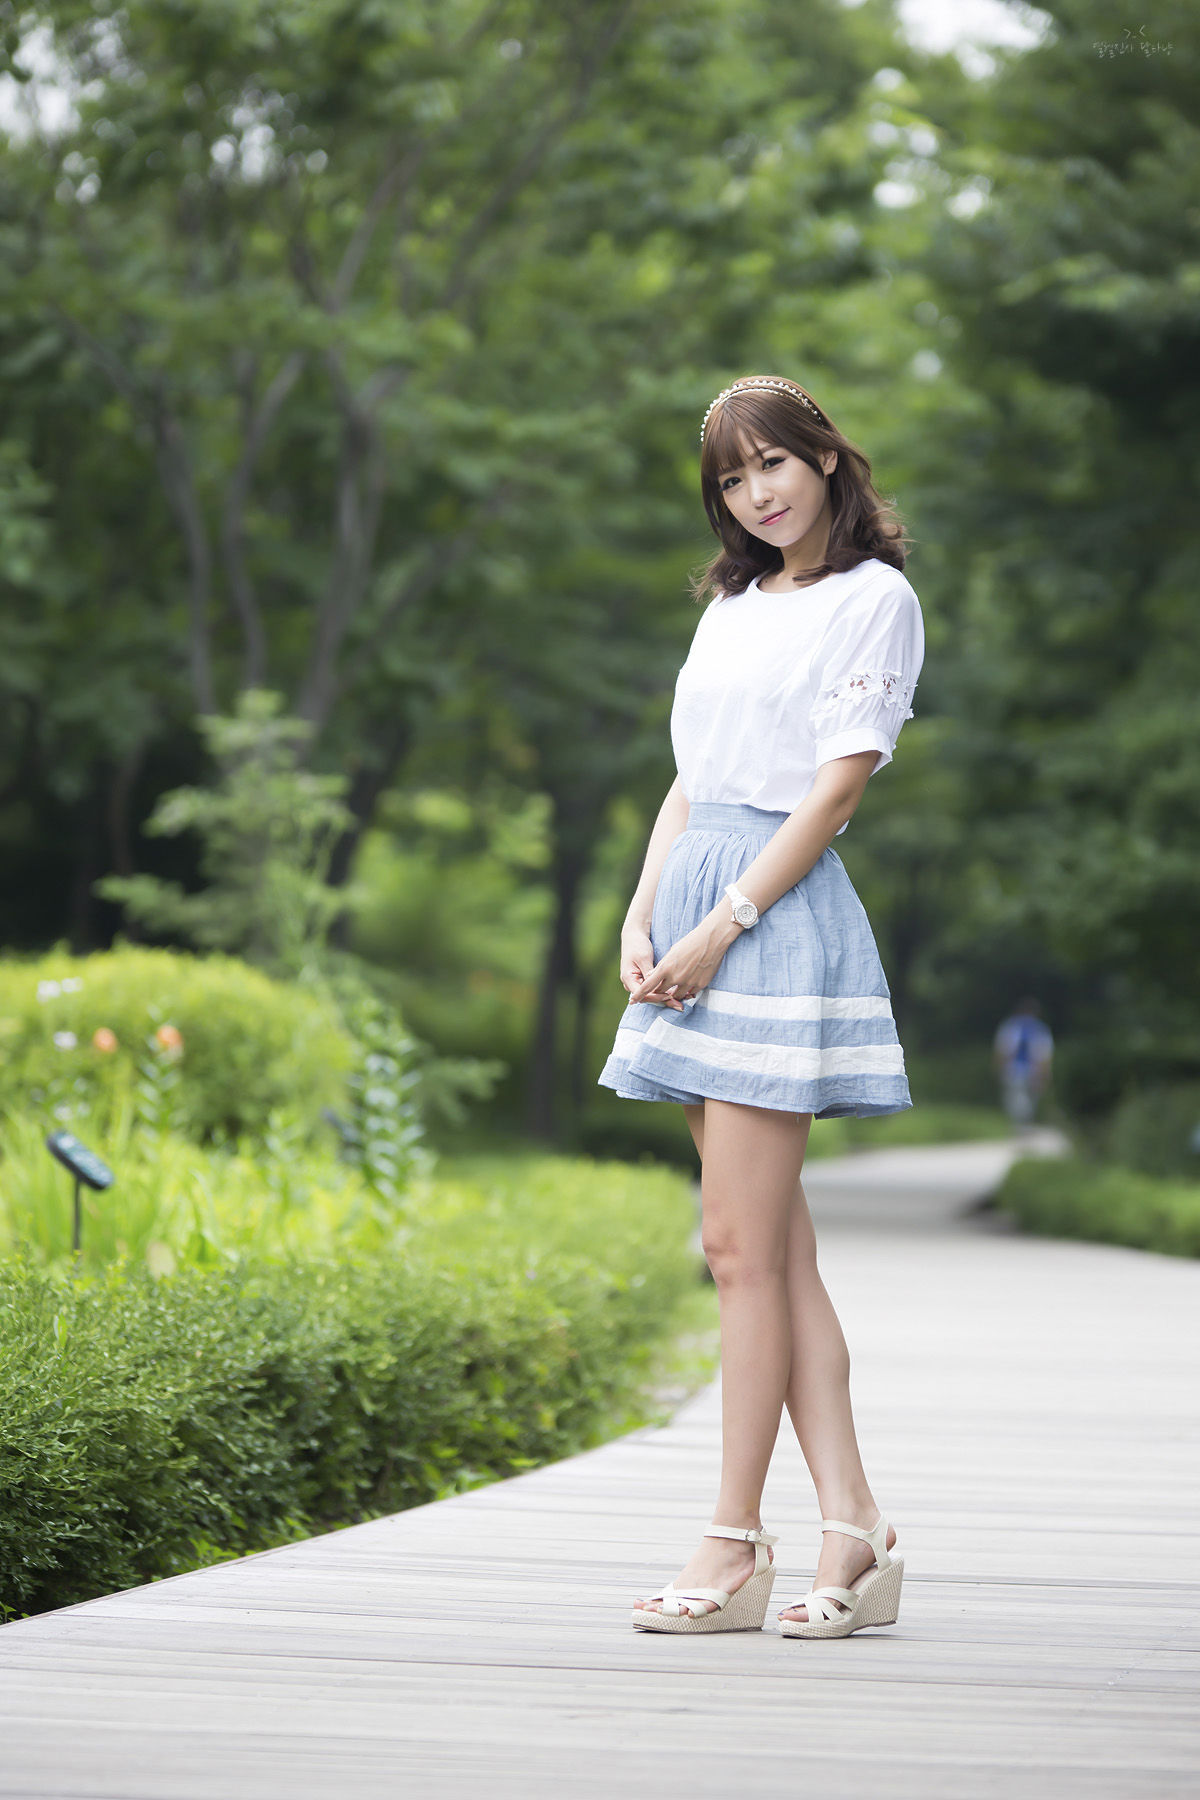 Lee Eun-hye „Outside Photo in Park Skirt” [koreańska piękność] Strona 35 No.421935